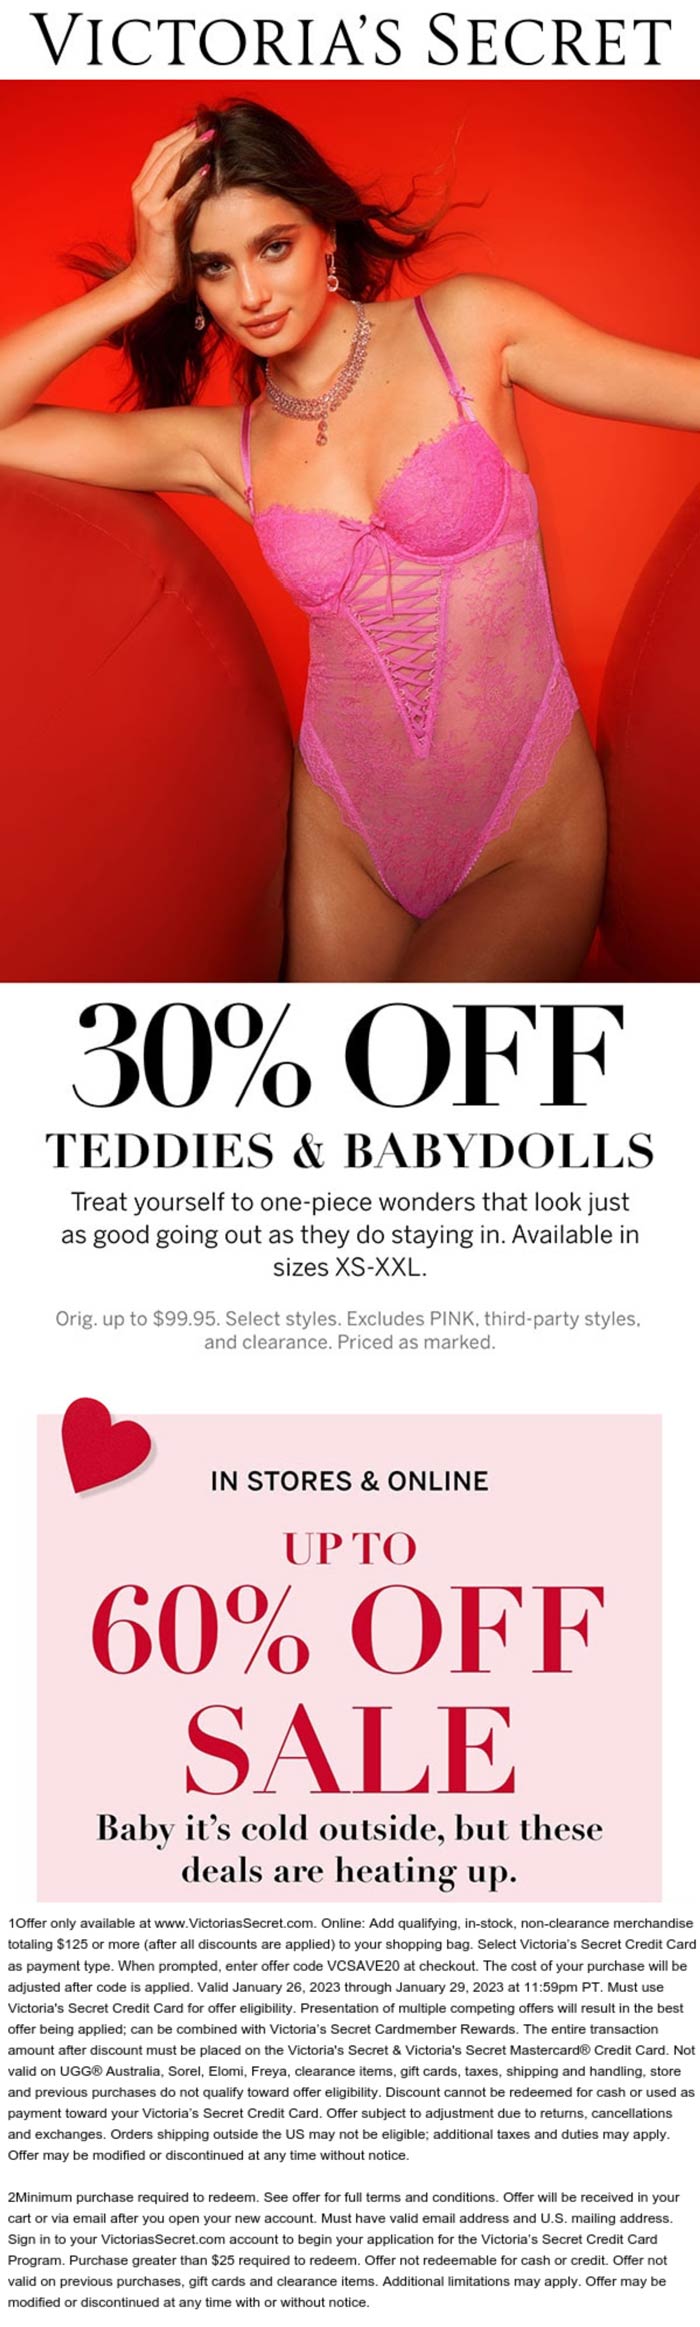 Victorias Secret stores Coupon  30% off teddies & babydolls today online at Victorias Secret #victoriassecret 